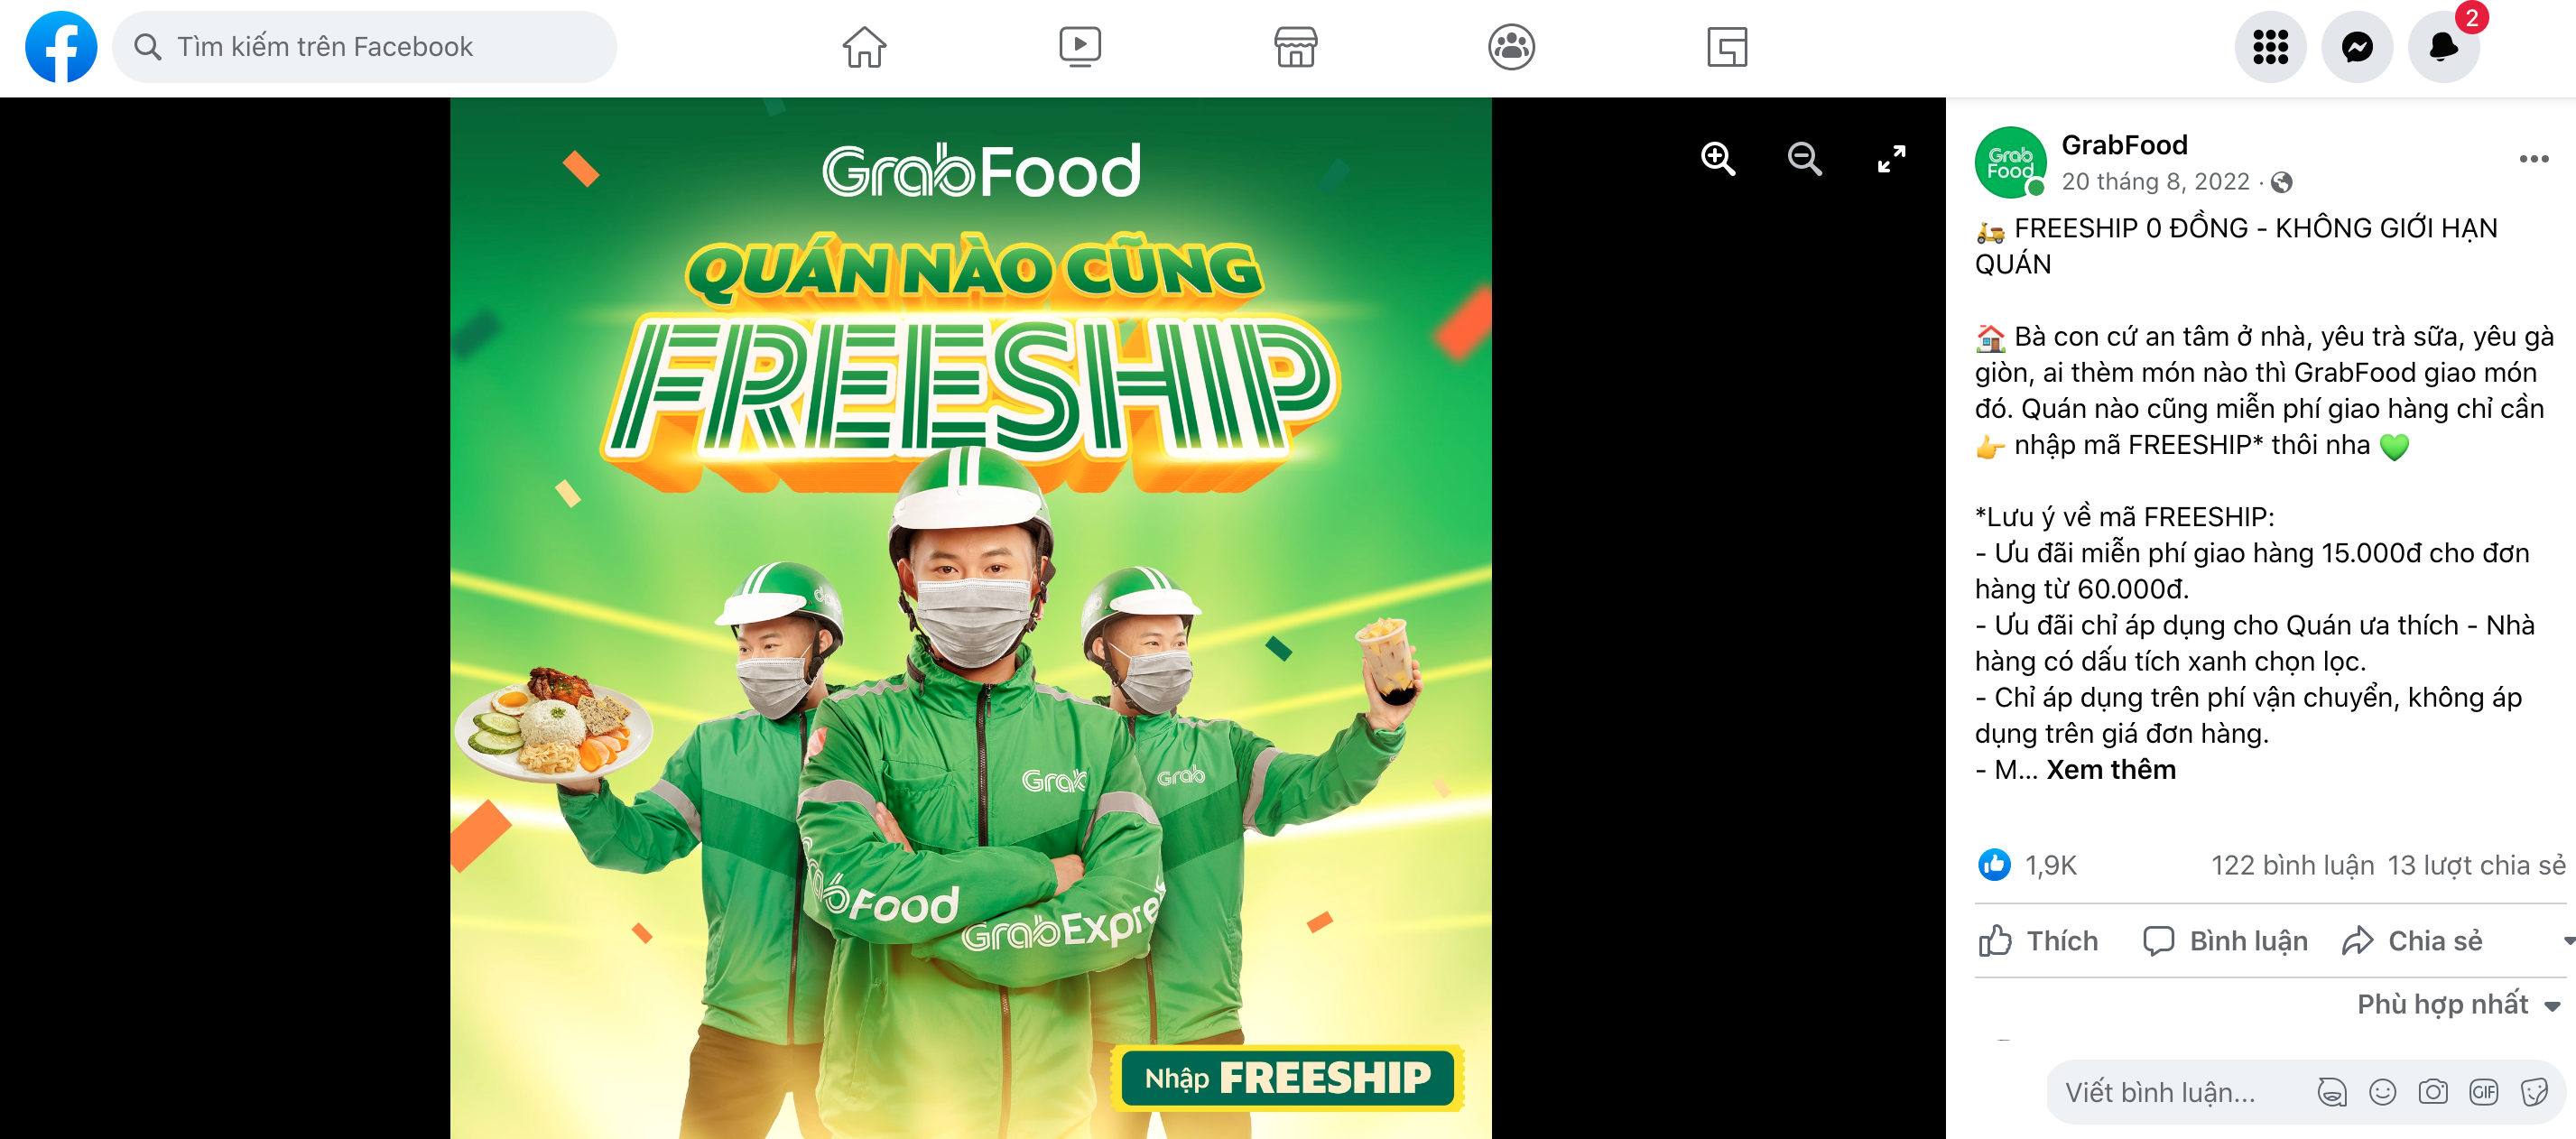 Mã freeship Grabfood